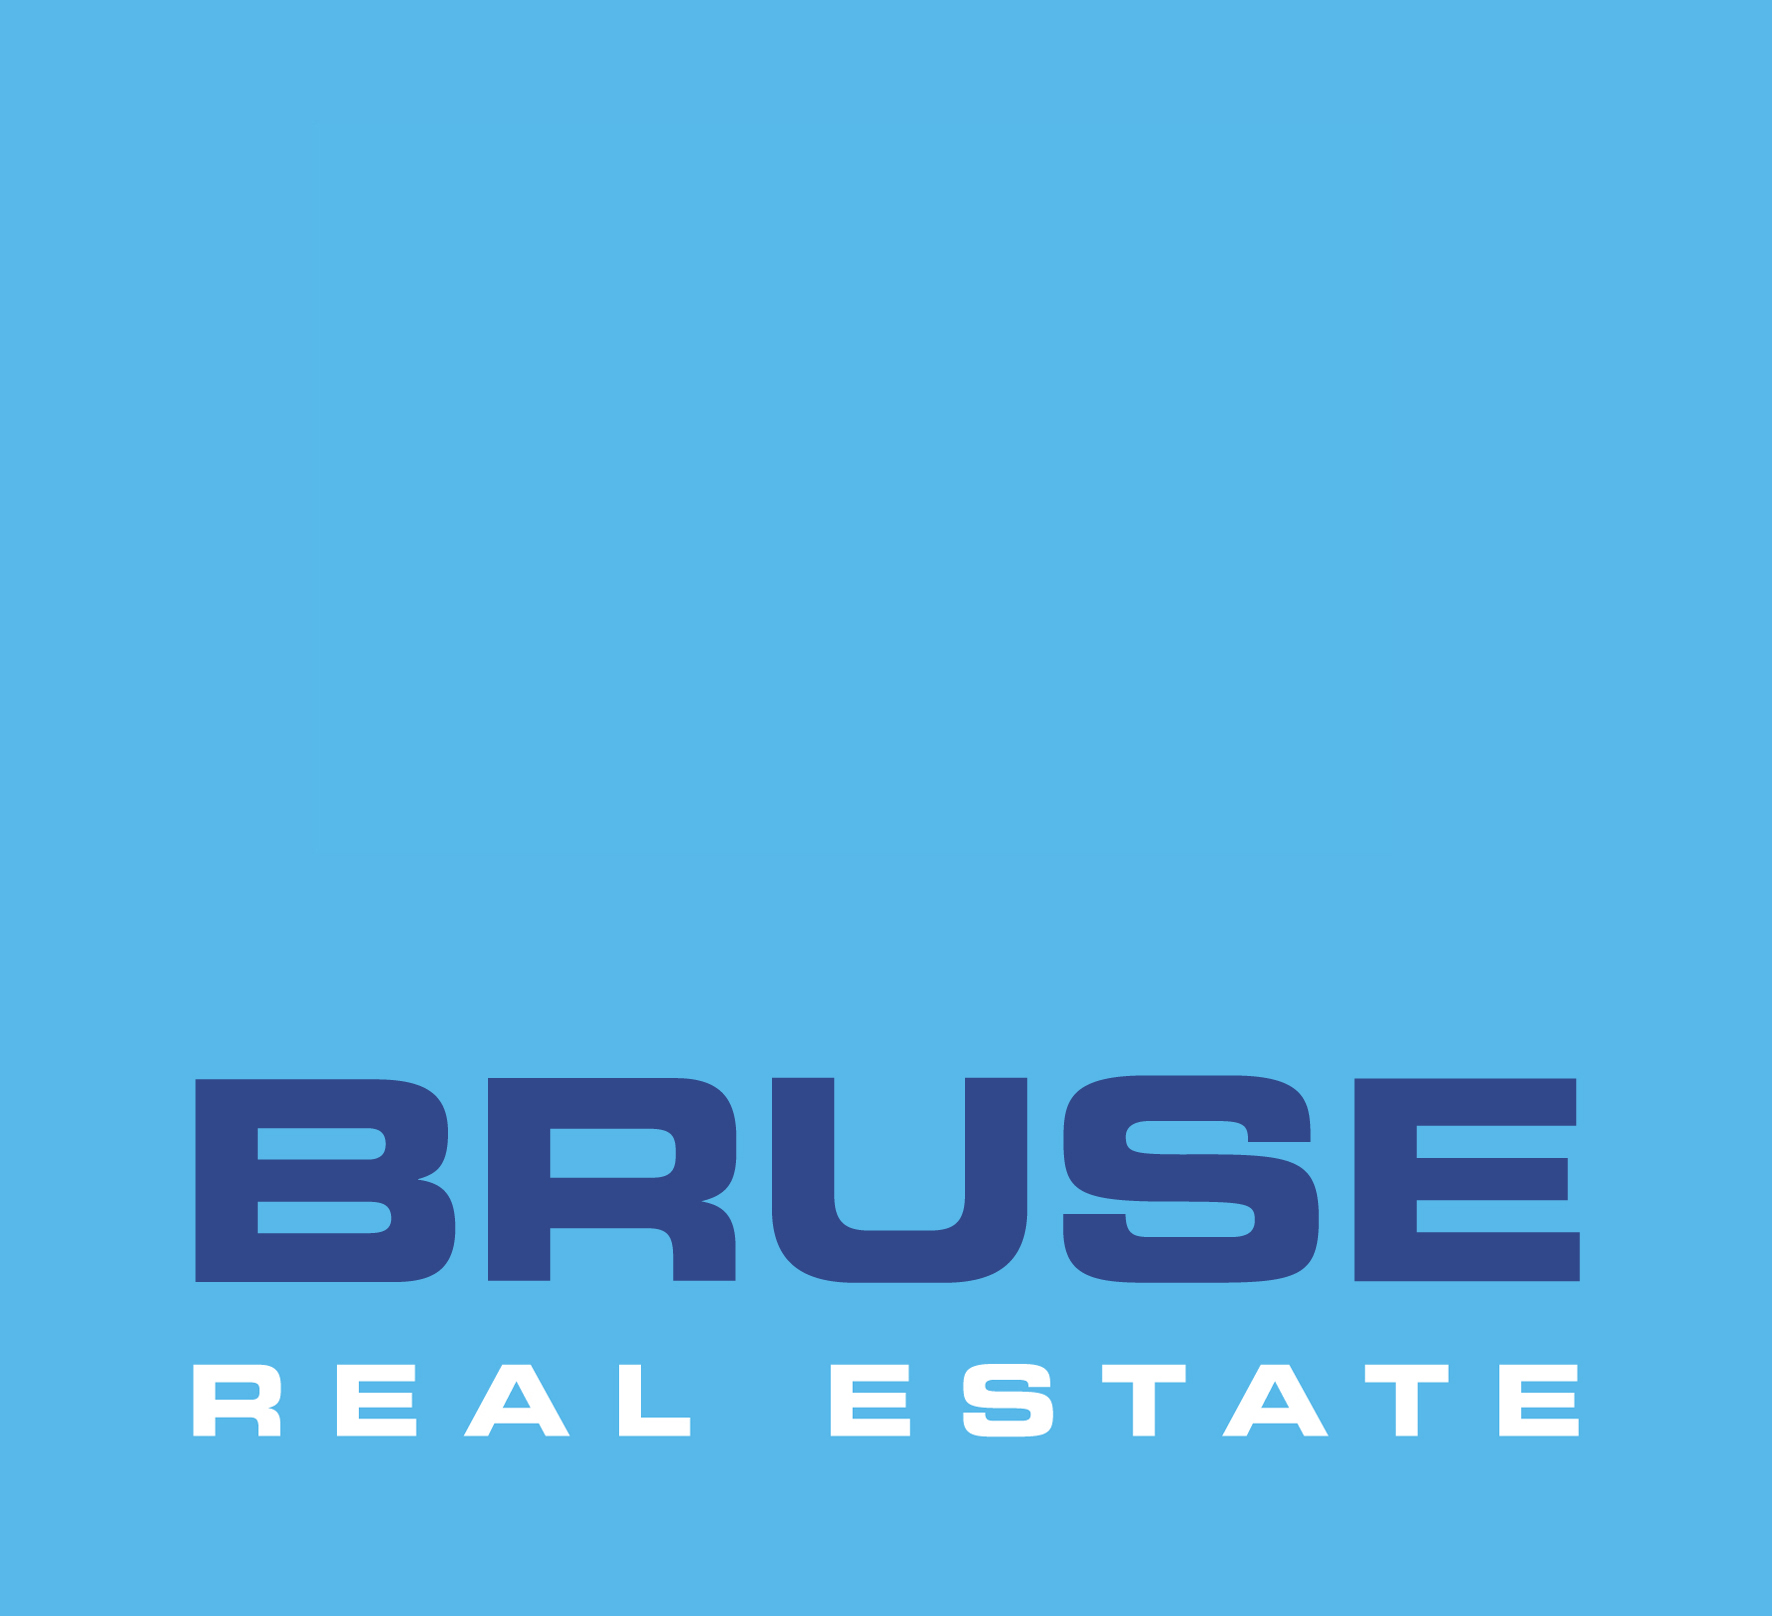 Bruse Real Estate